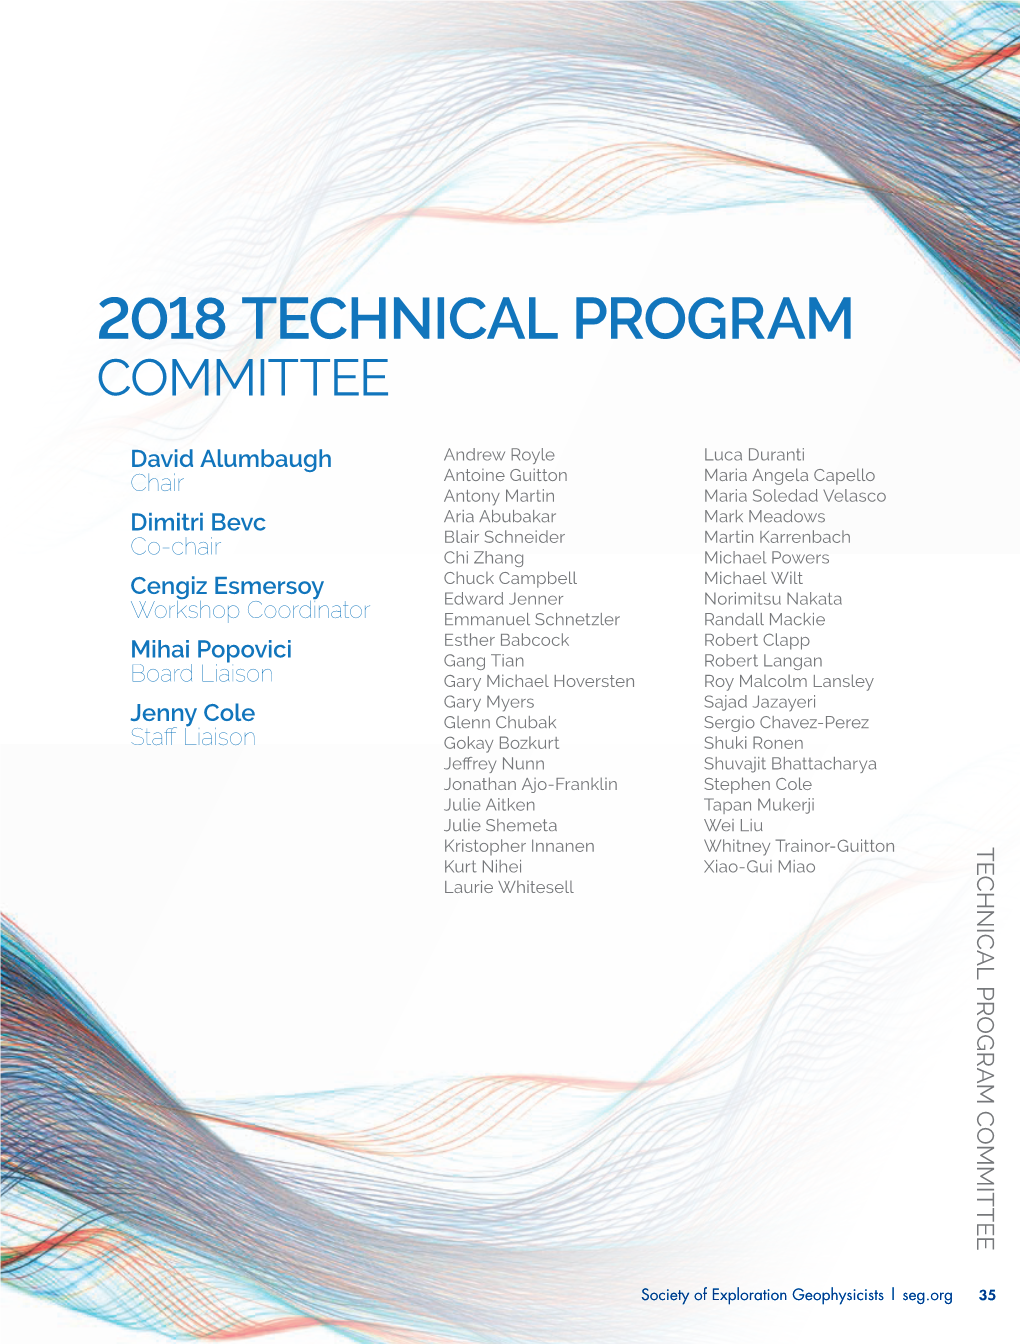 2018 Technical Program Committee